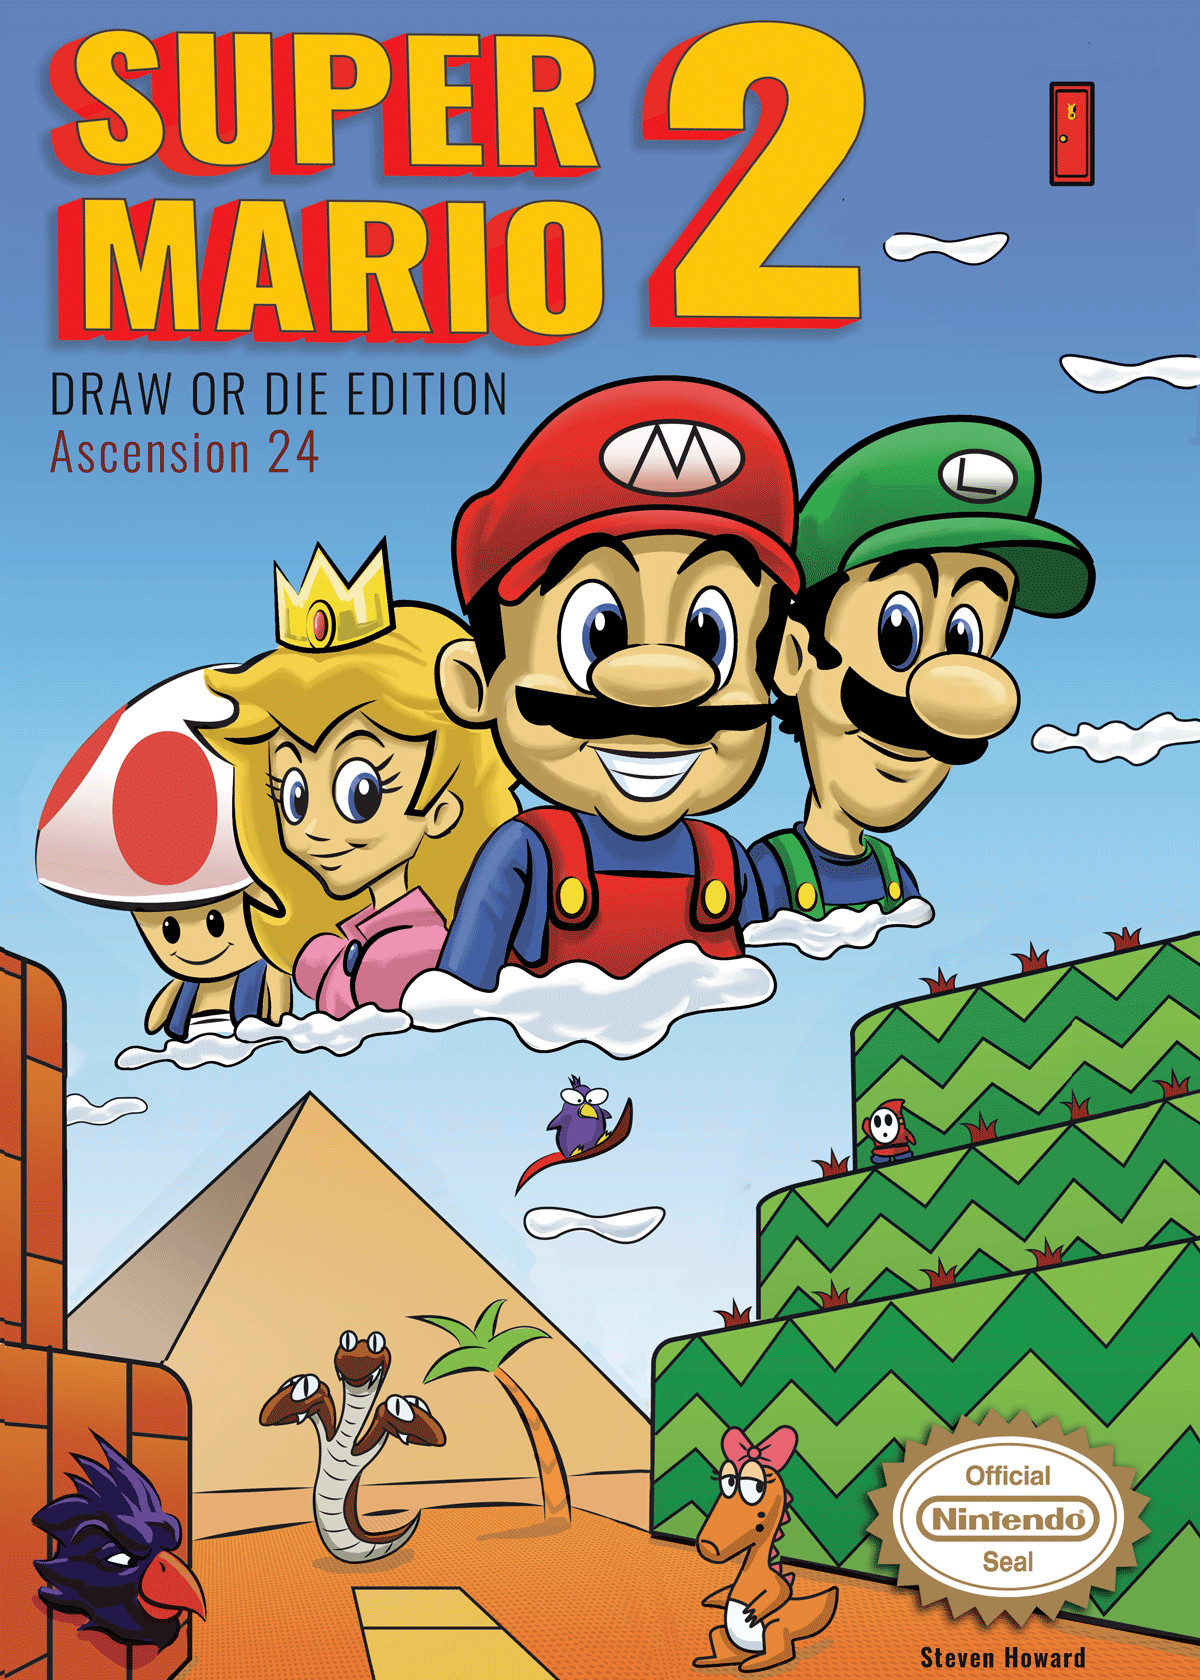 ArtStation - Super Mario 2 - Box Cover Art